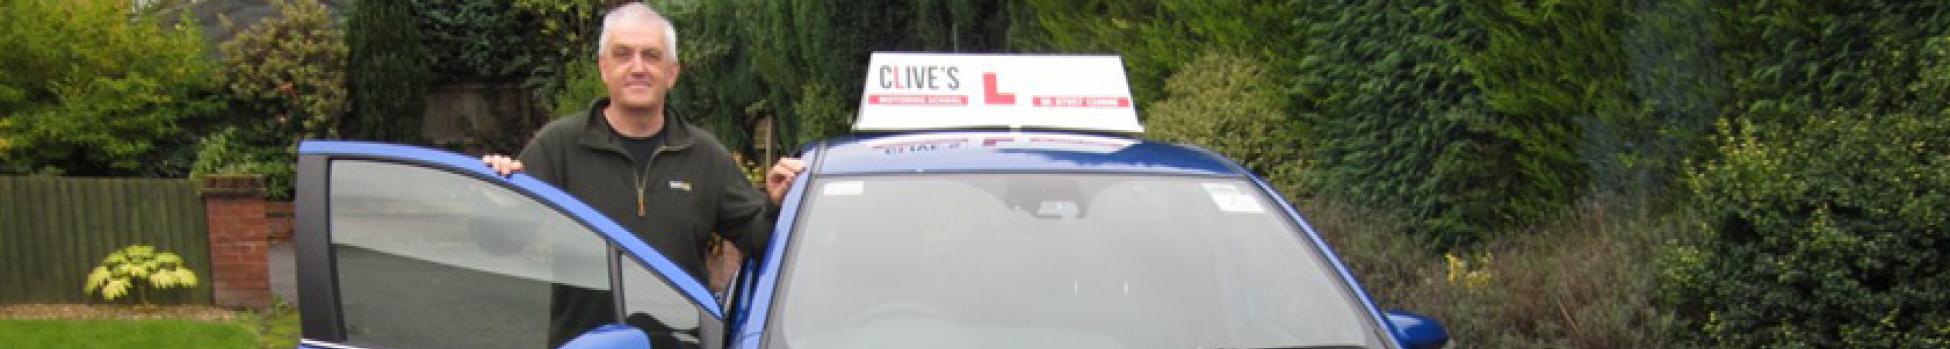 Clive's Motoring School